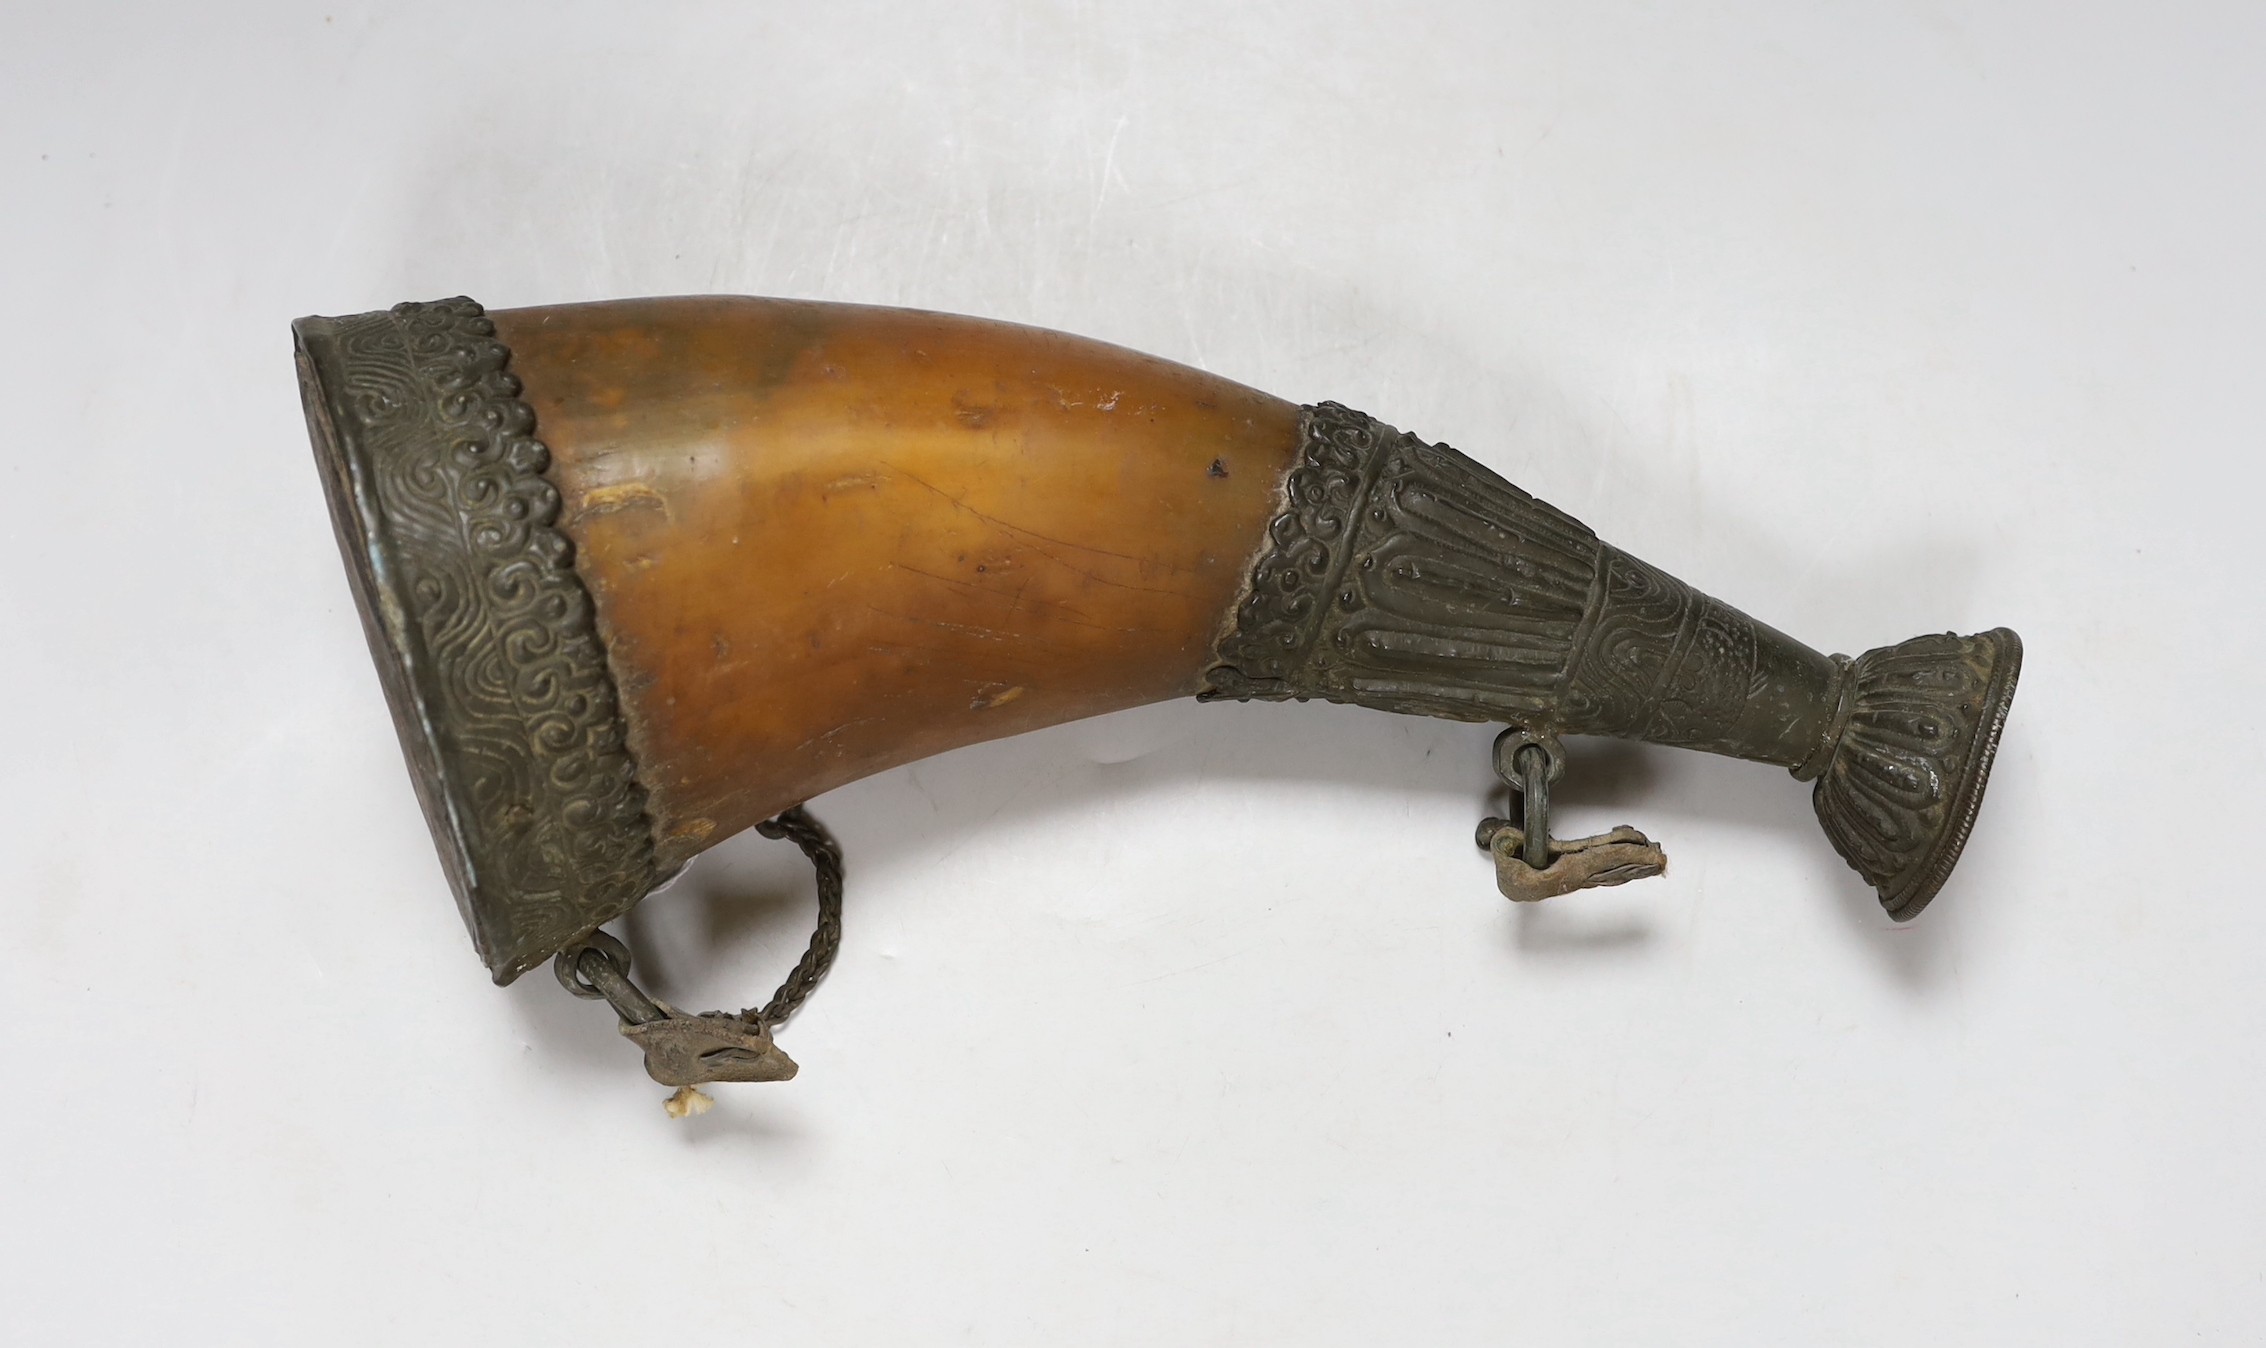 A large Tibetan metal mounted horn flask, 31cms high